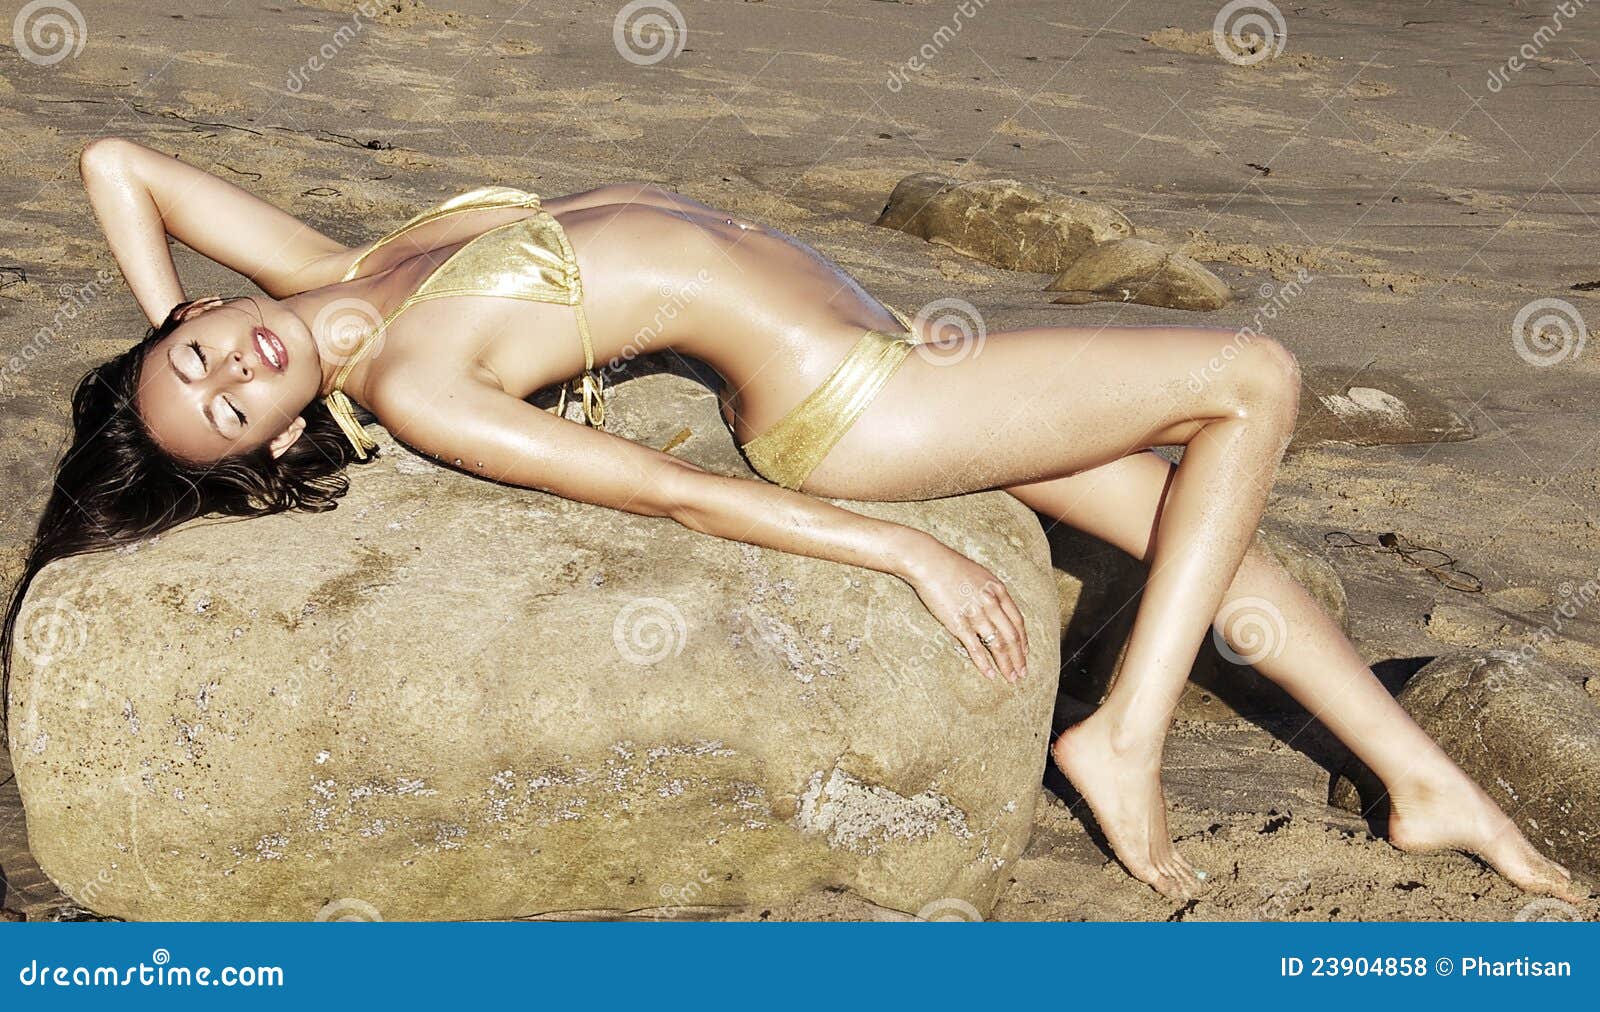 Exotic Slim Beauty Lying on Beach Stock Photo pic